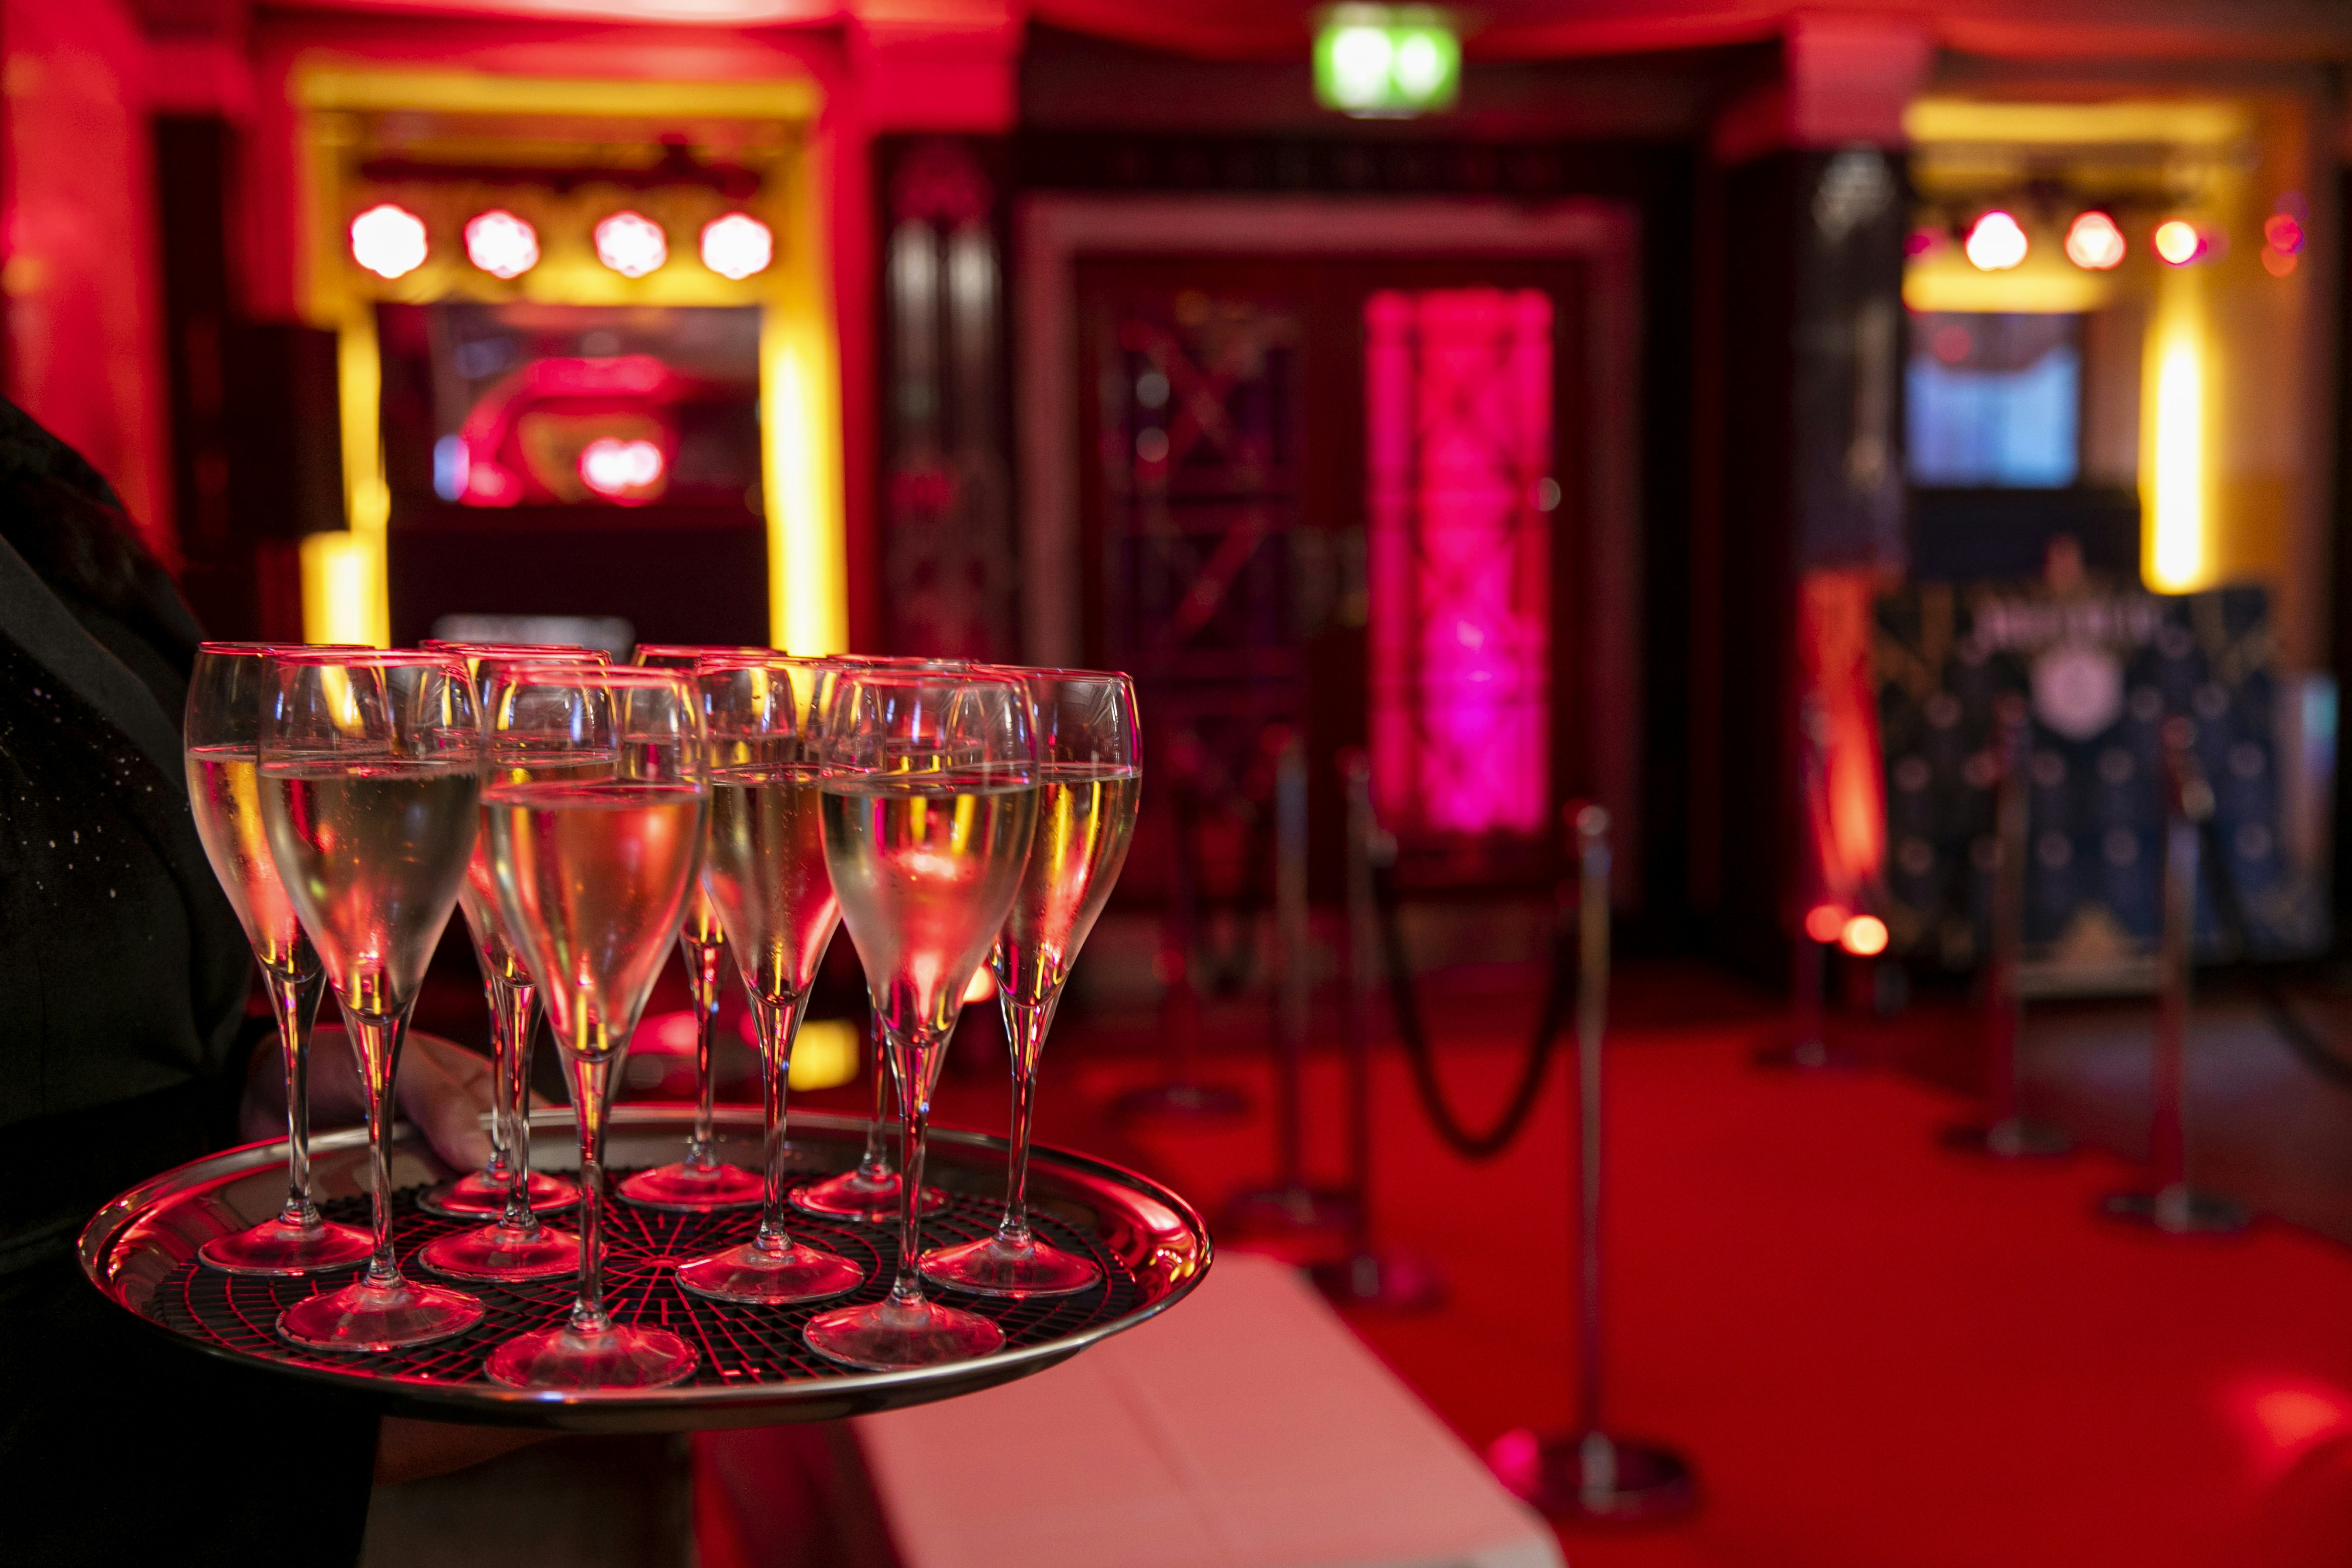 The Bloomsbury Ballroom  - The Rose Bar image 5